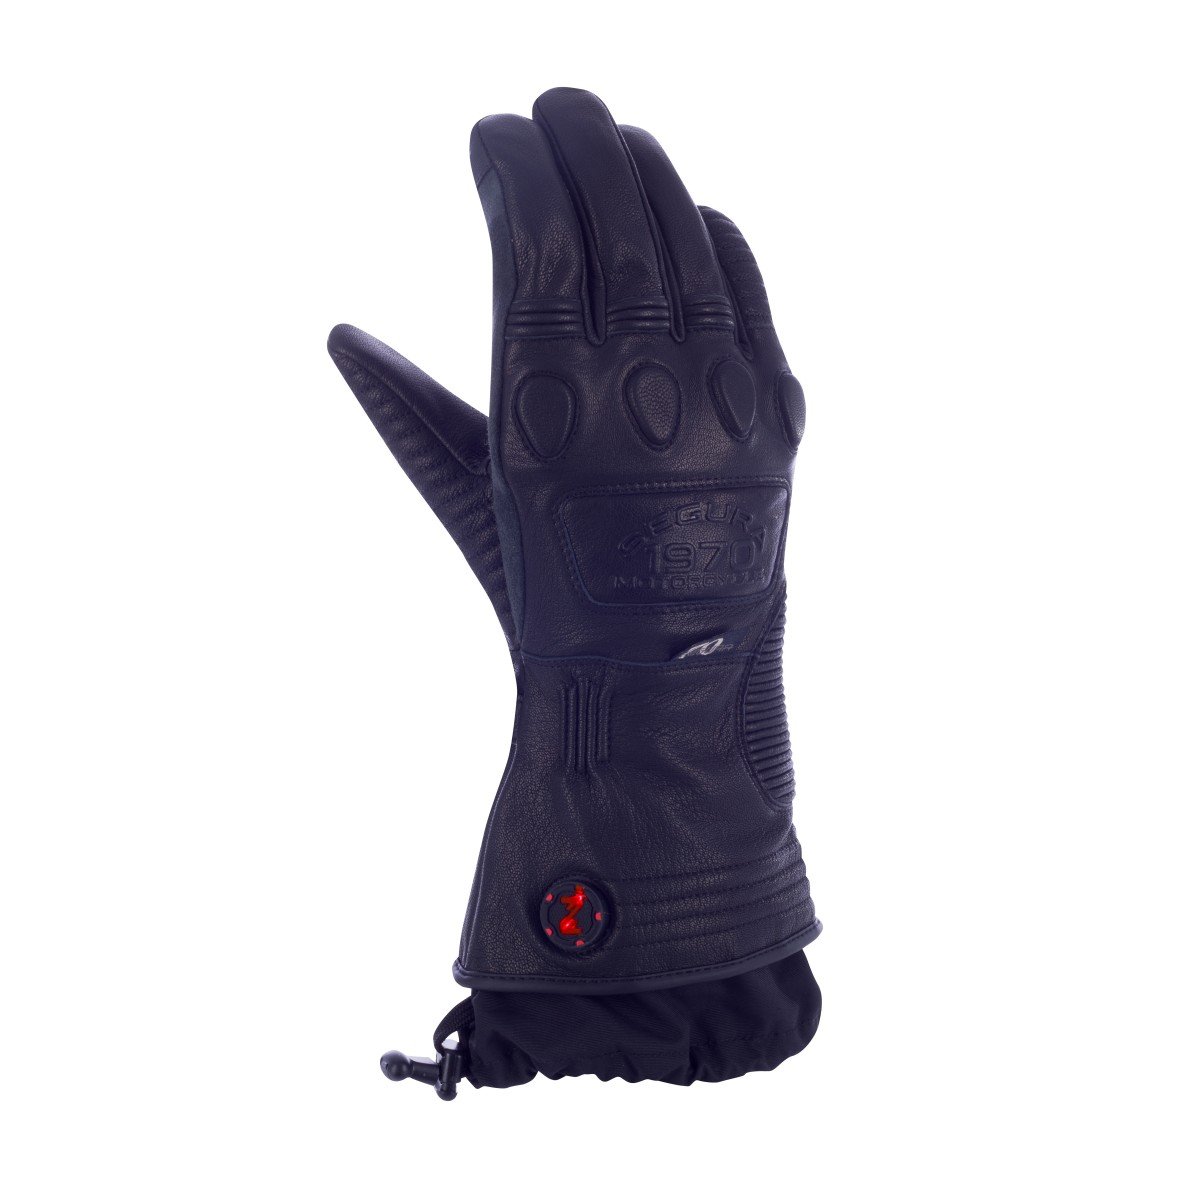 Image of Segura Shiro Black Heated Gloves Size T8 ID 3660815151877